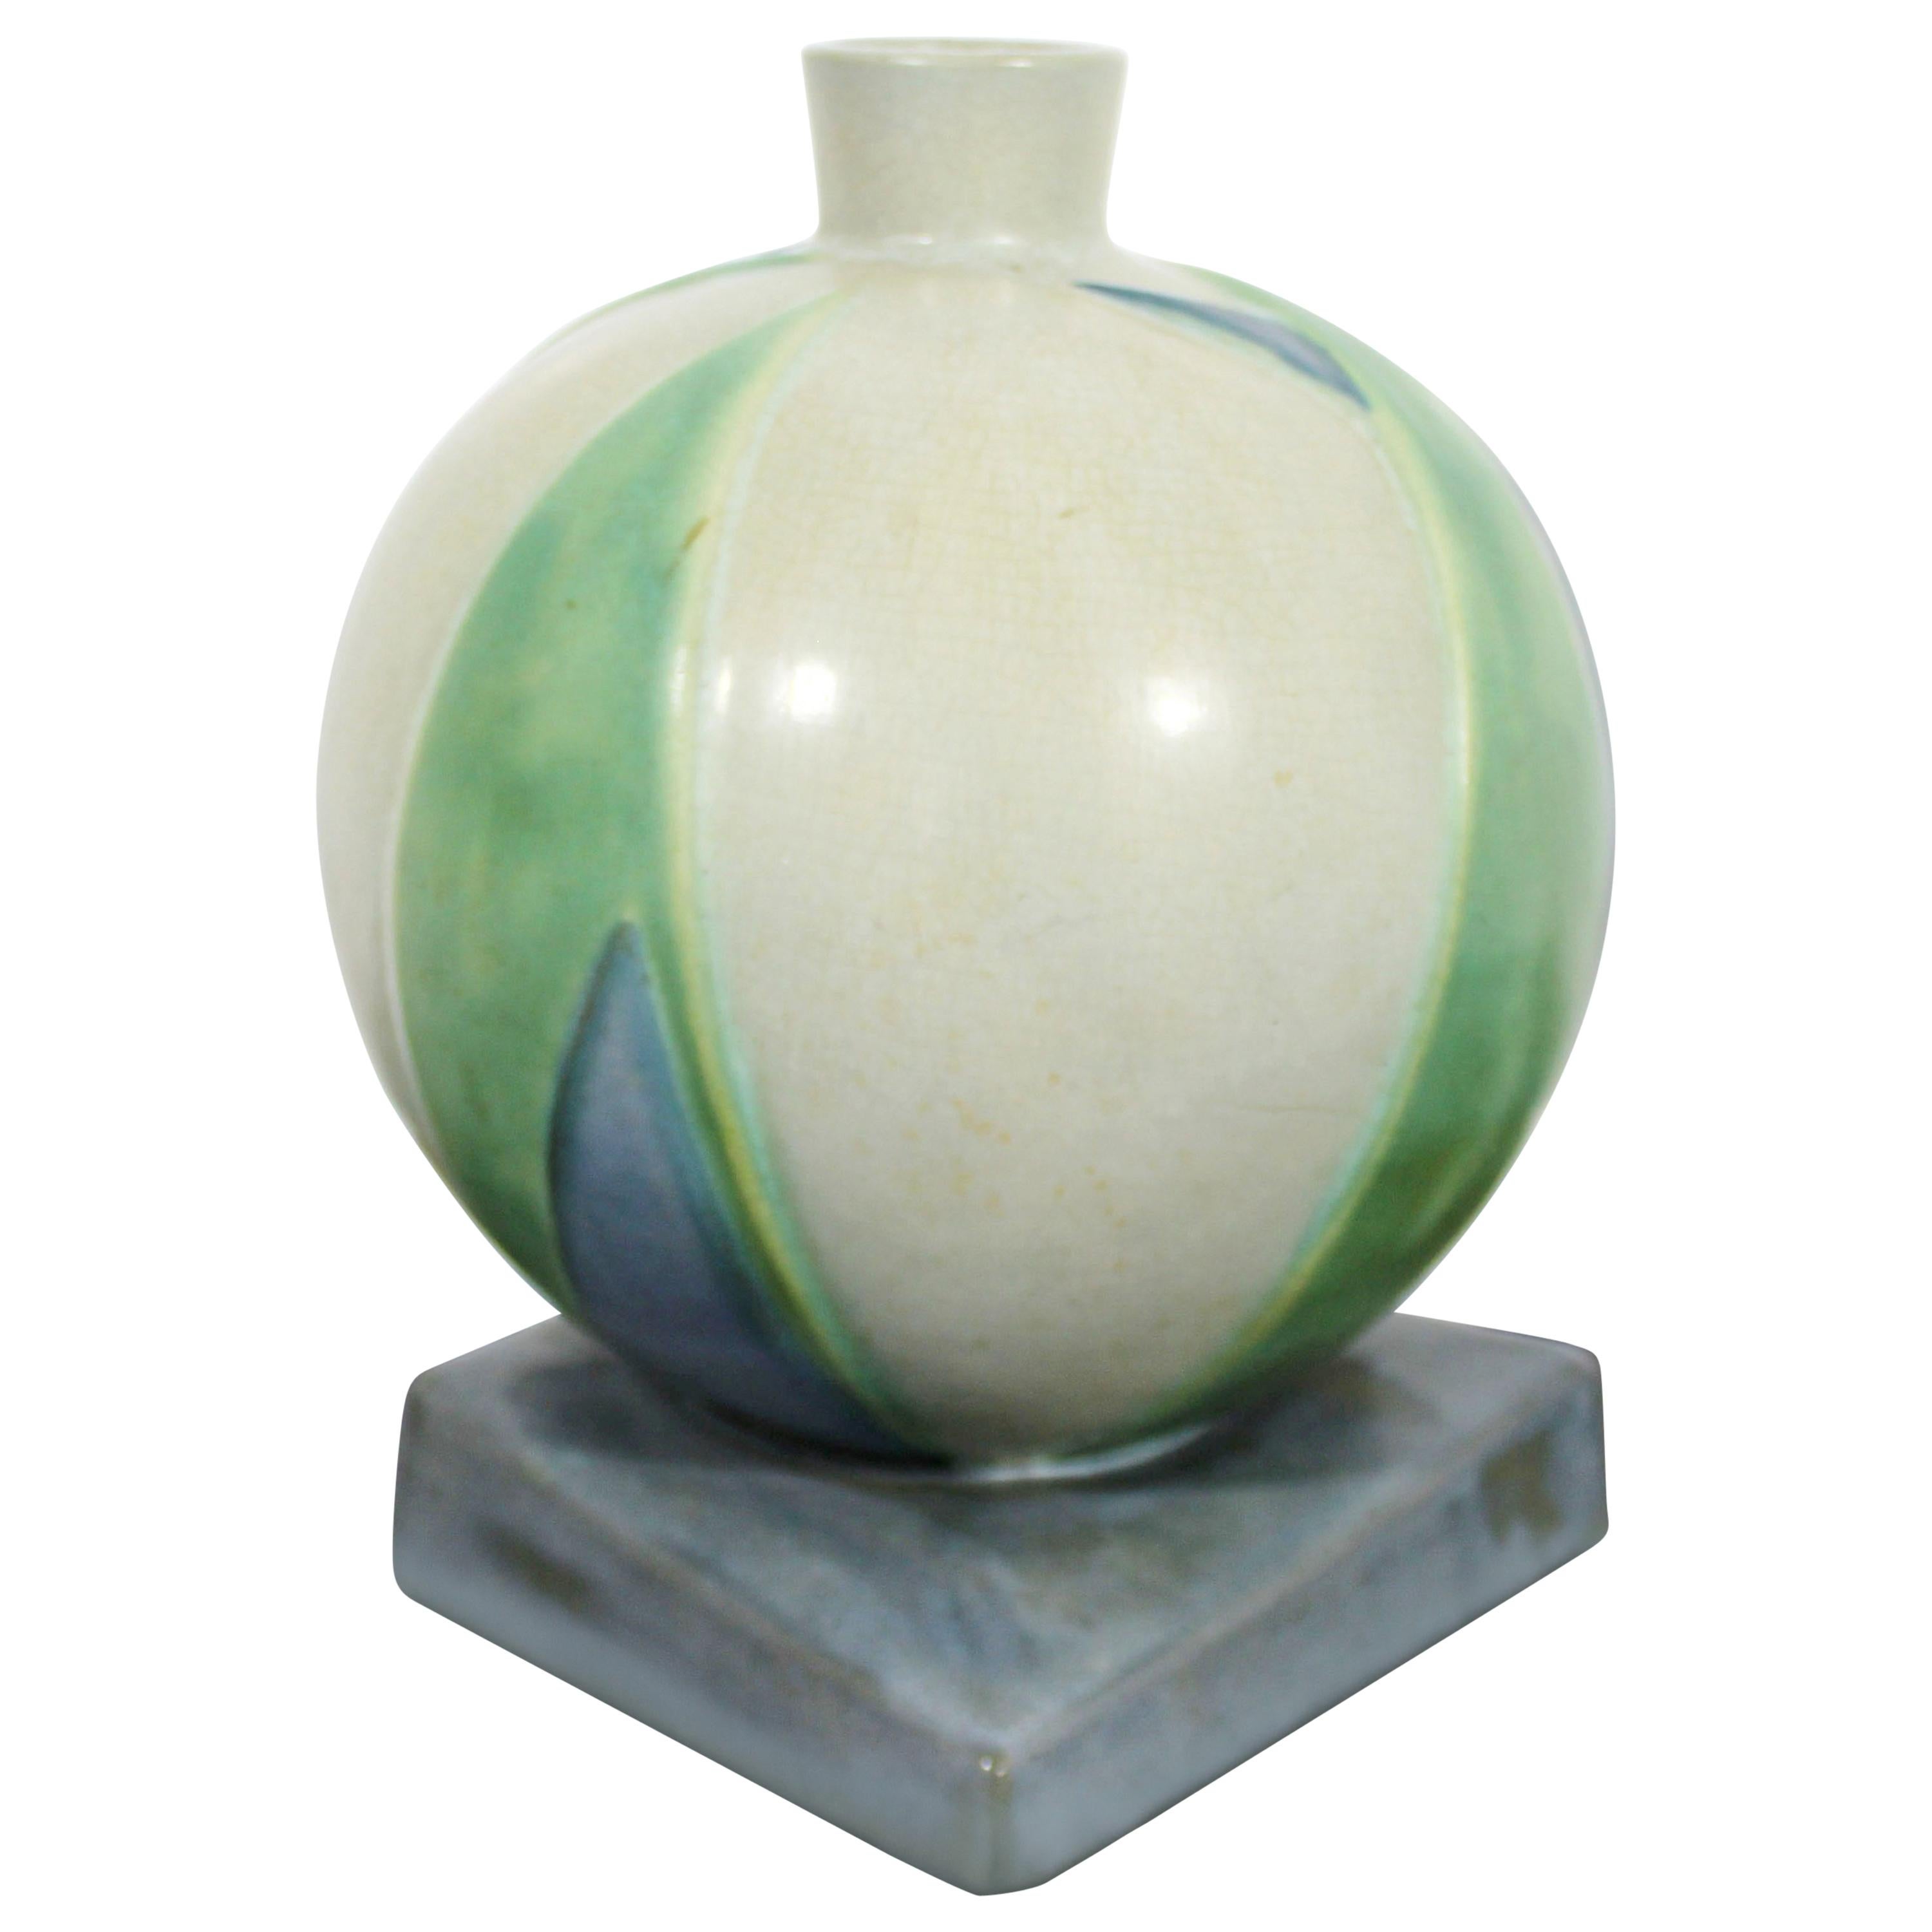 Art Deco Roseville Futura Lotus Leaf Ball Ceramic Art Vase Vessel Green Blue